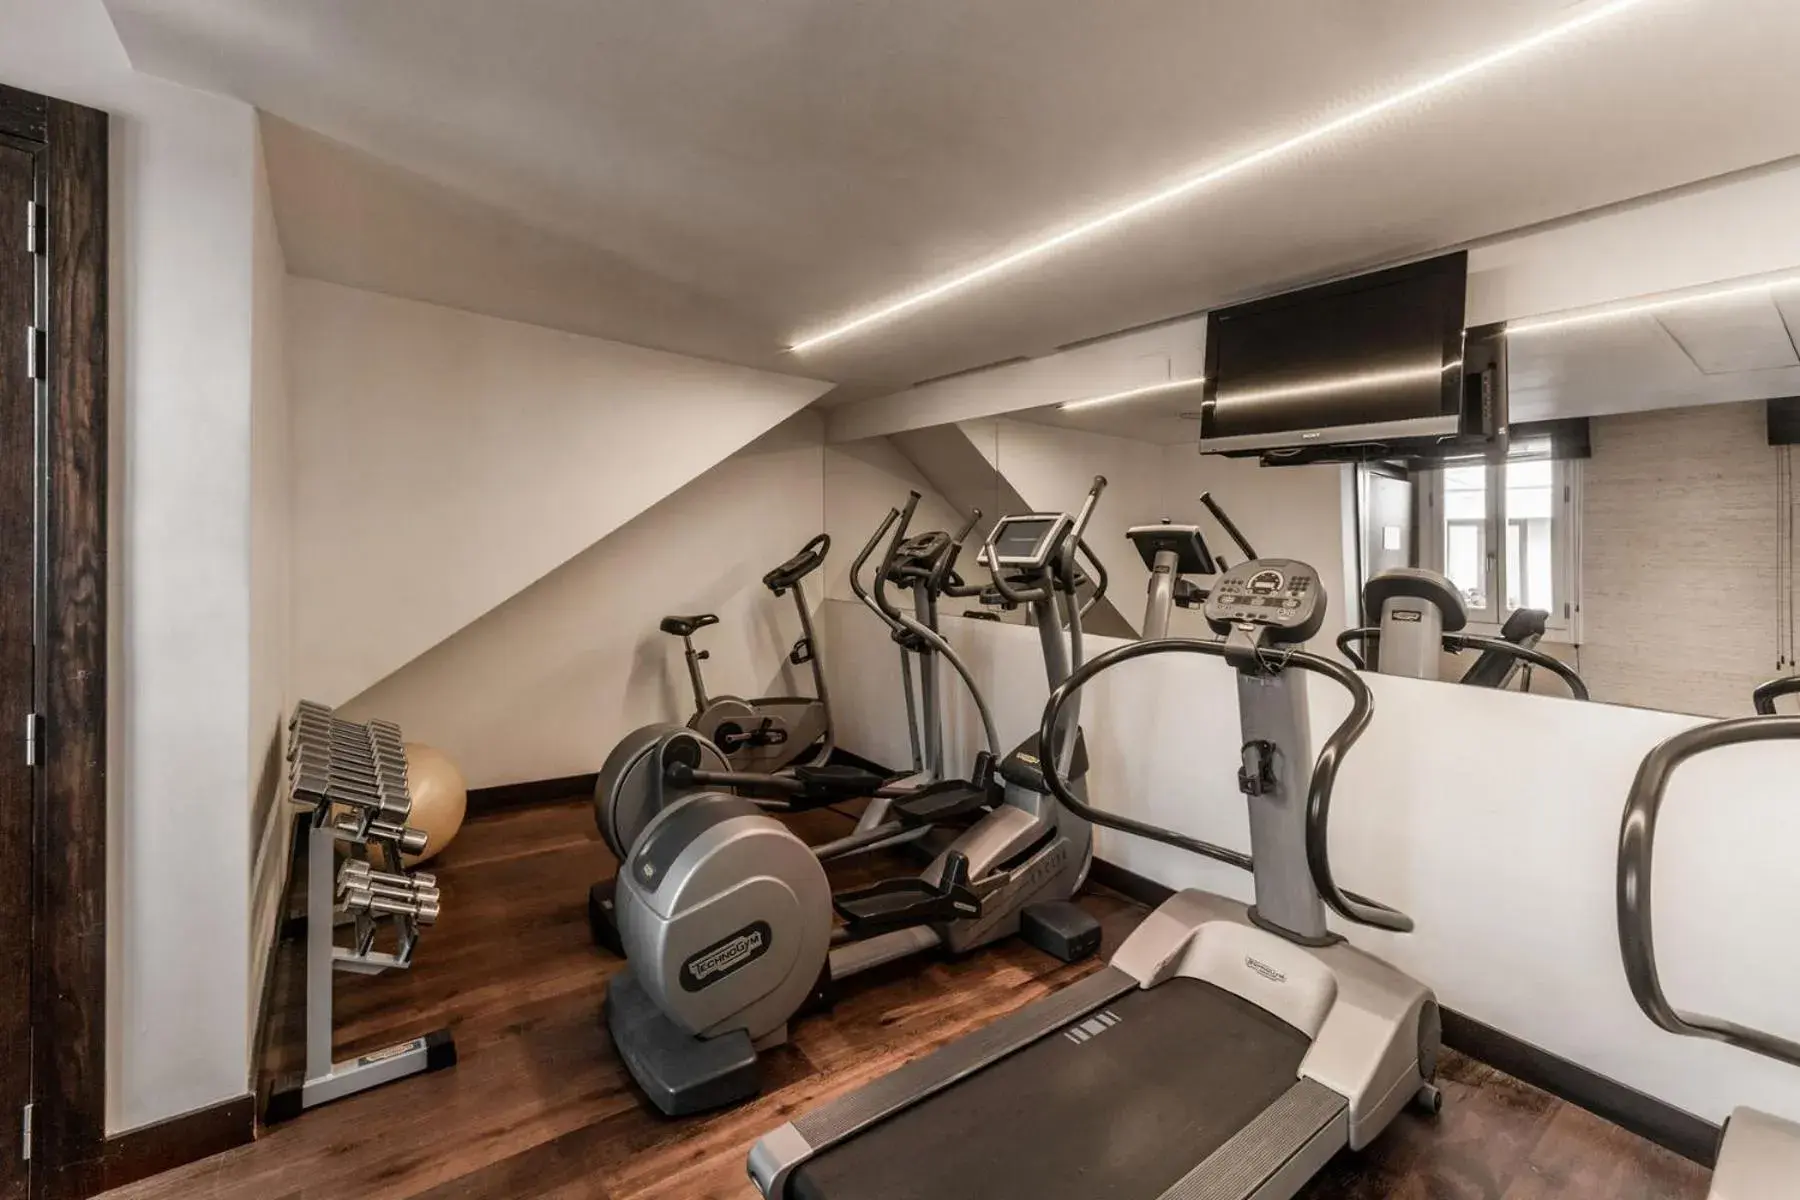 Fitness centre/facilities, Fitness Center/Facilities in Hospes Puerta de Alcalá